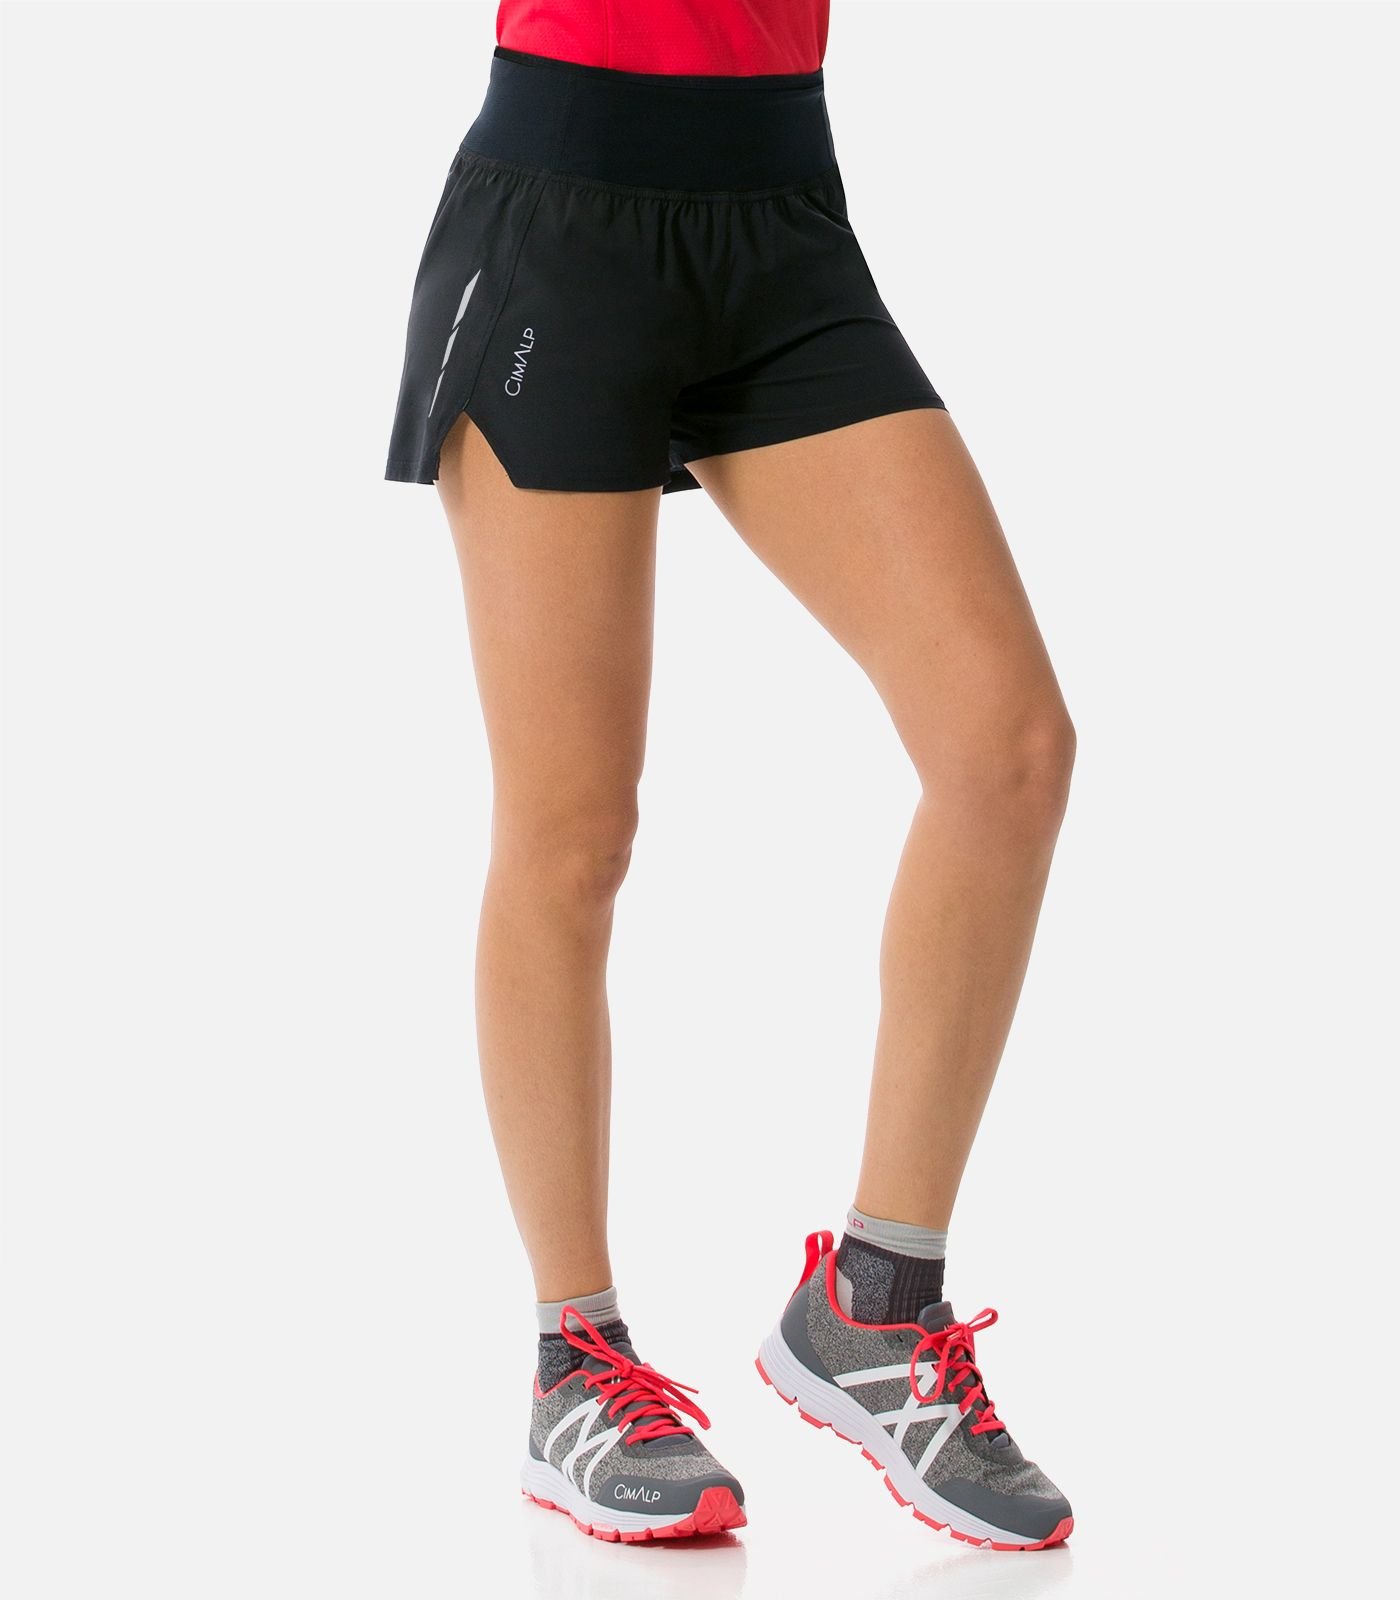 Trail Running shorts with built-in underwear